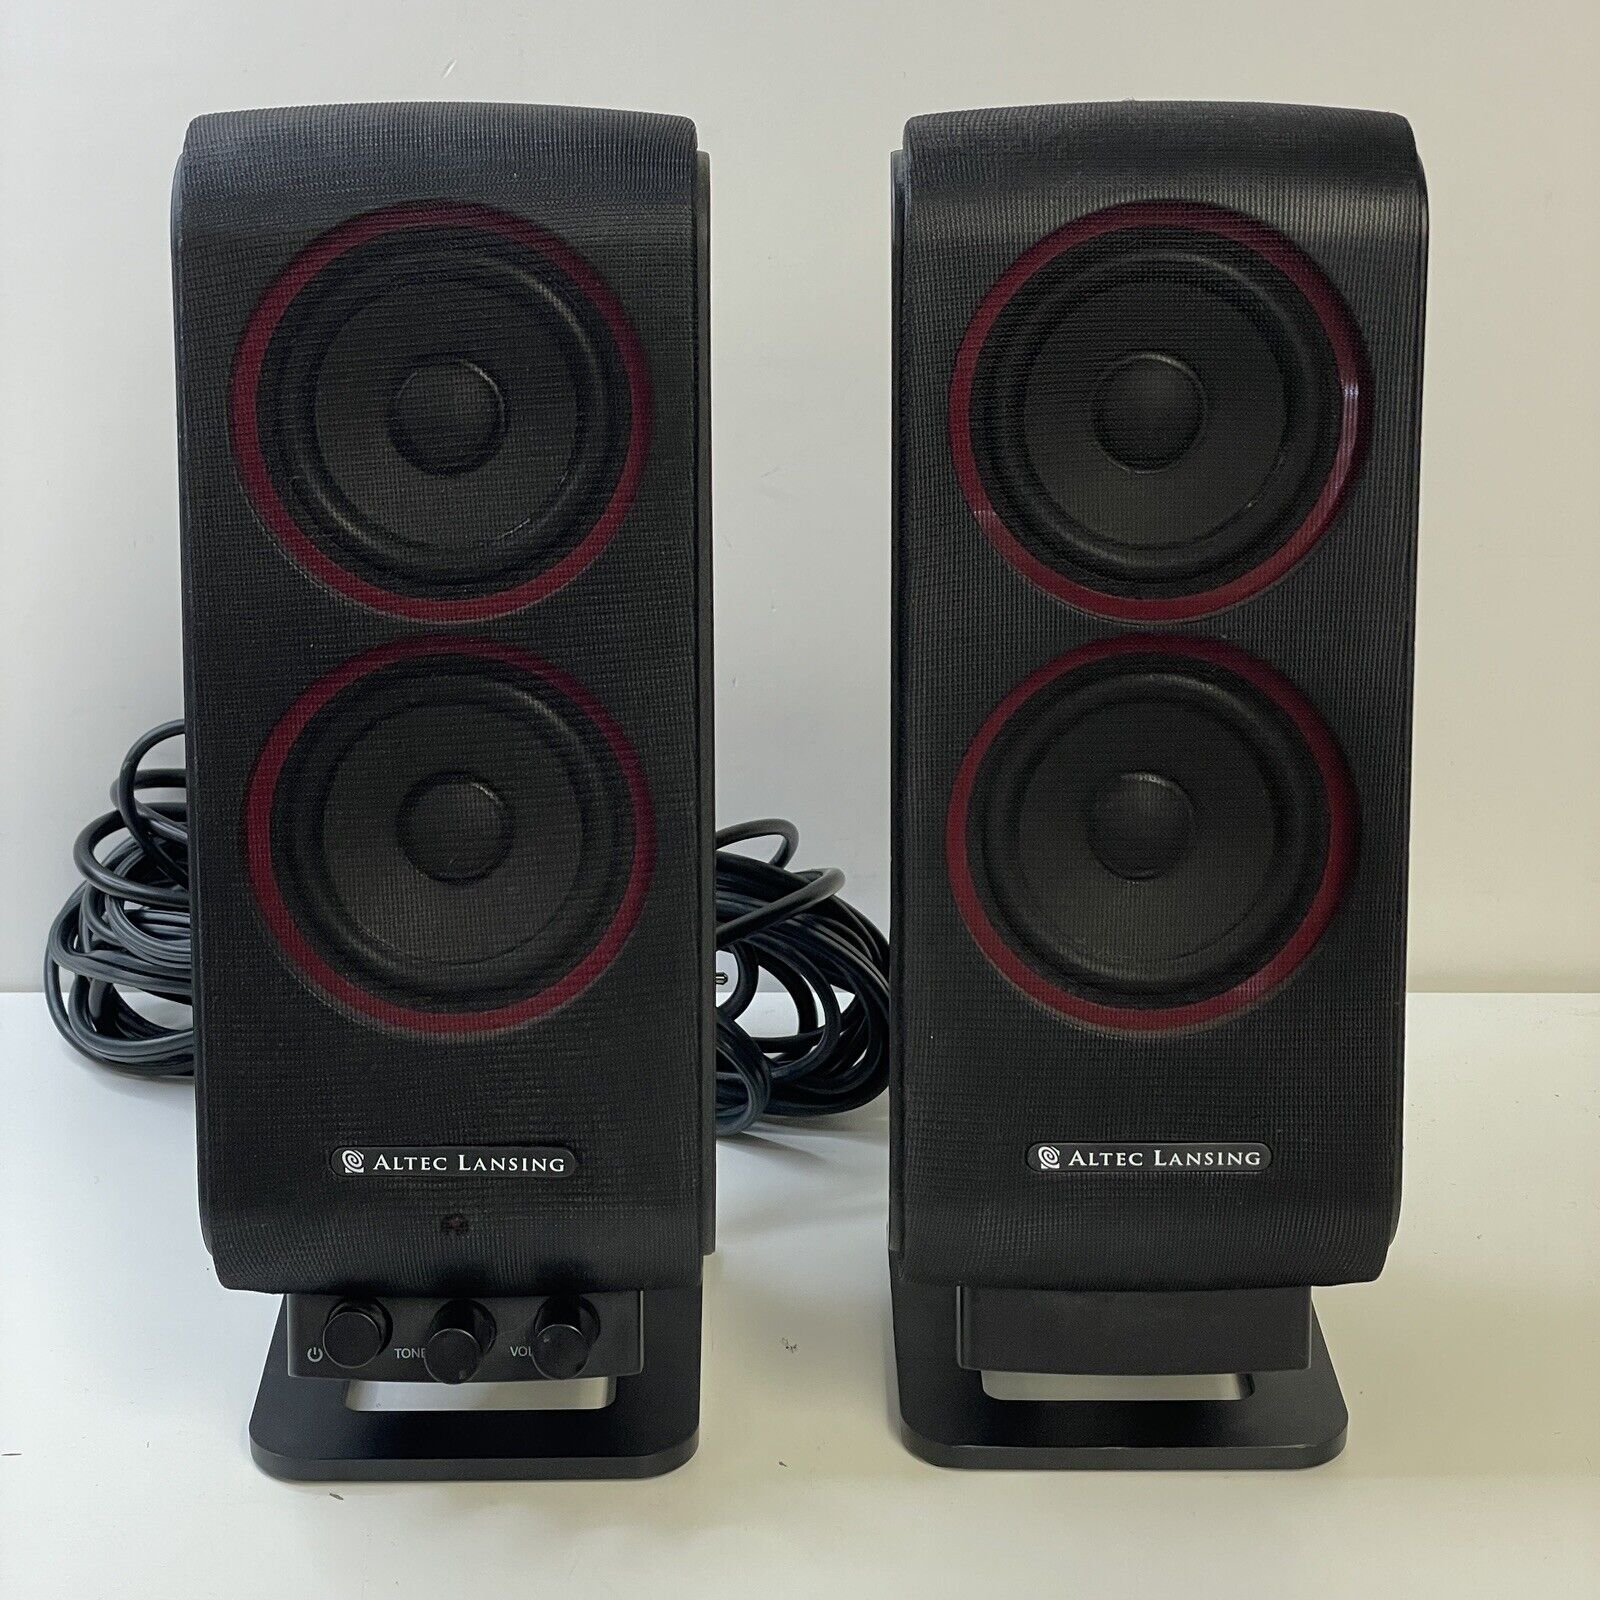 VS2420 ALTEC LANSING POWERED AUDIO SYSTEM - Speakers for Computer - (N9)